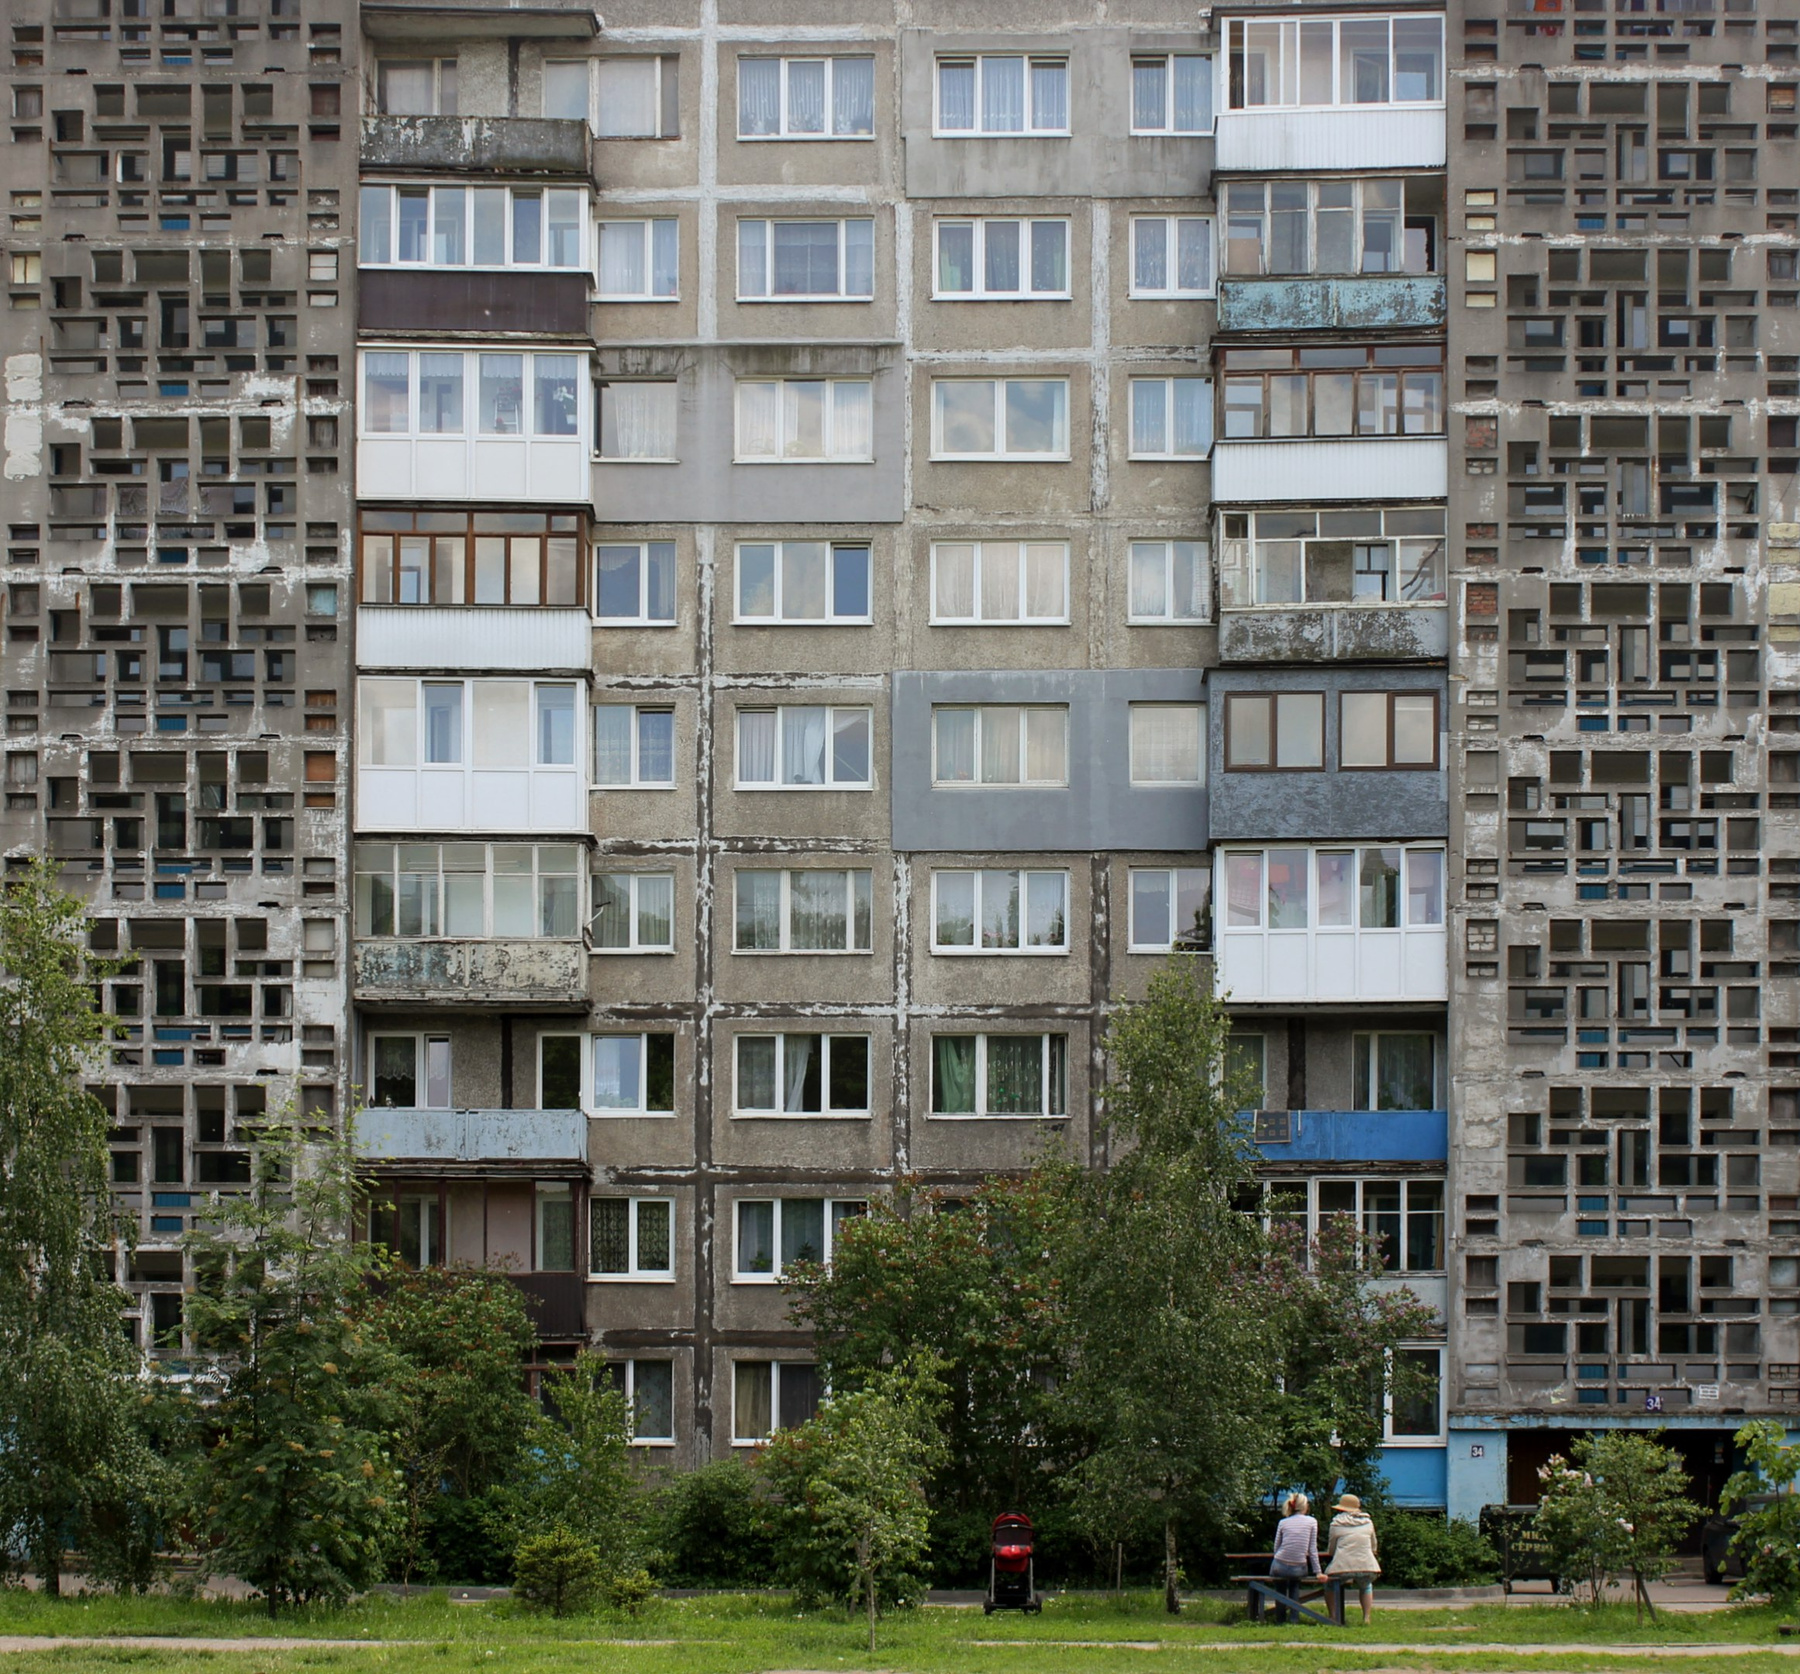 35 Gera More Калининград architecture архитектура buildings строения